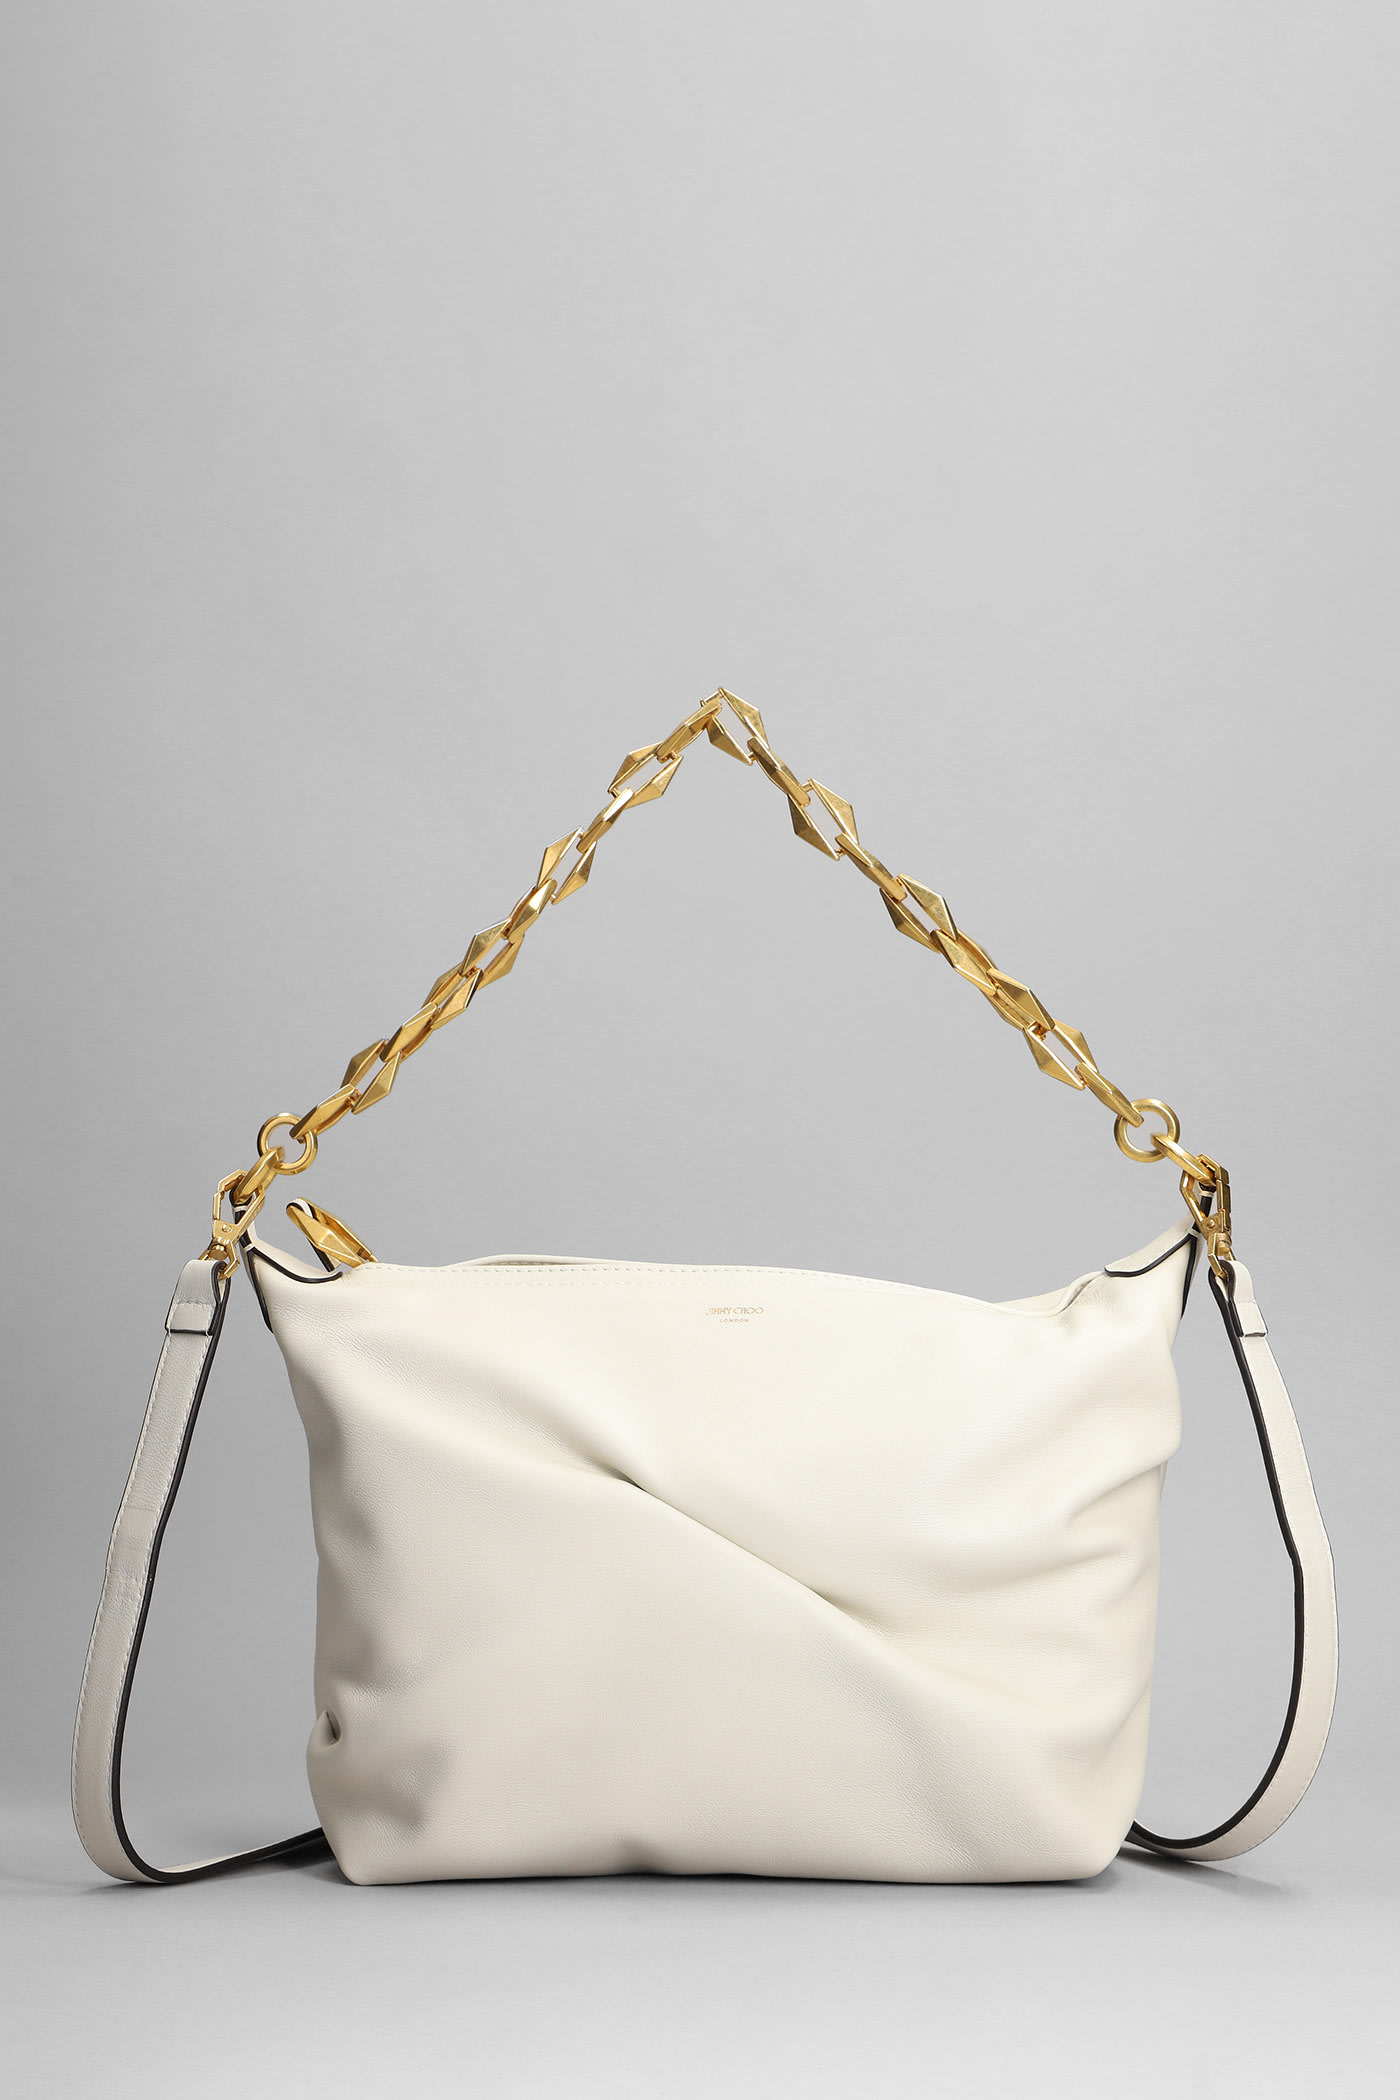 Jimmy Choo Diamond Shoulder Bag In White Leather